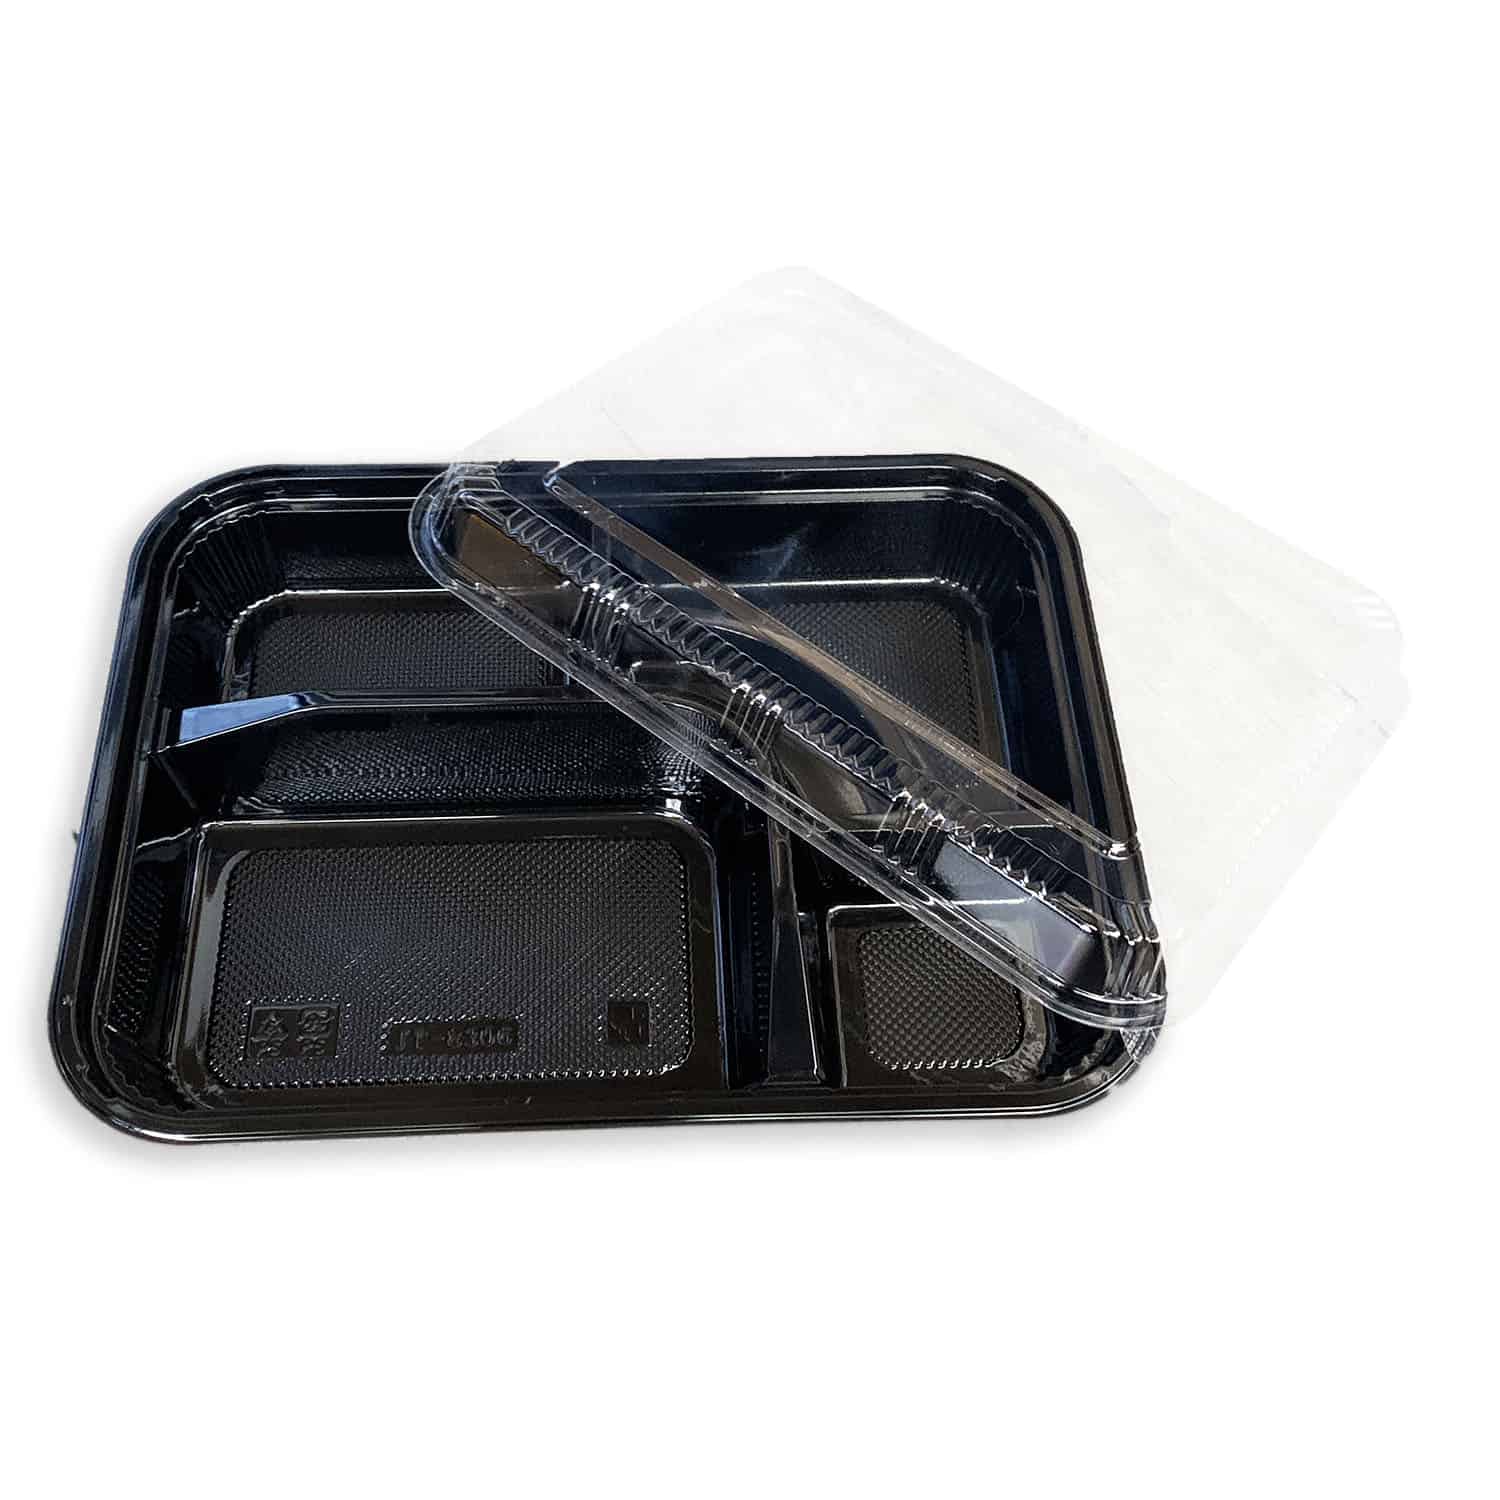 Bento box - 5 tray (JT8306) - Bento Box & More